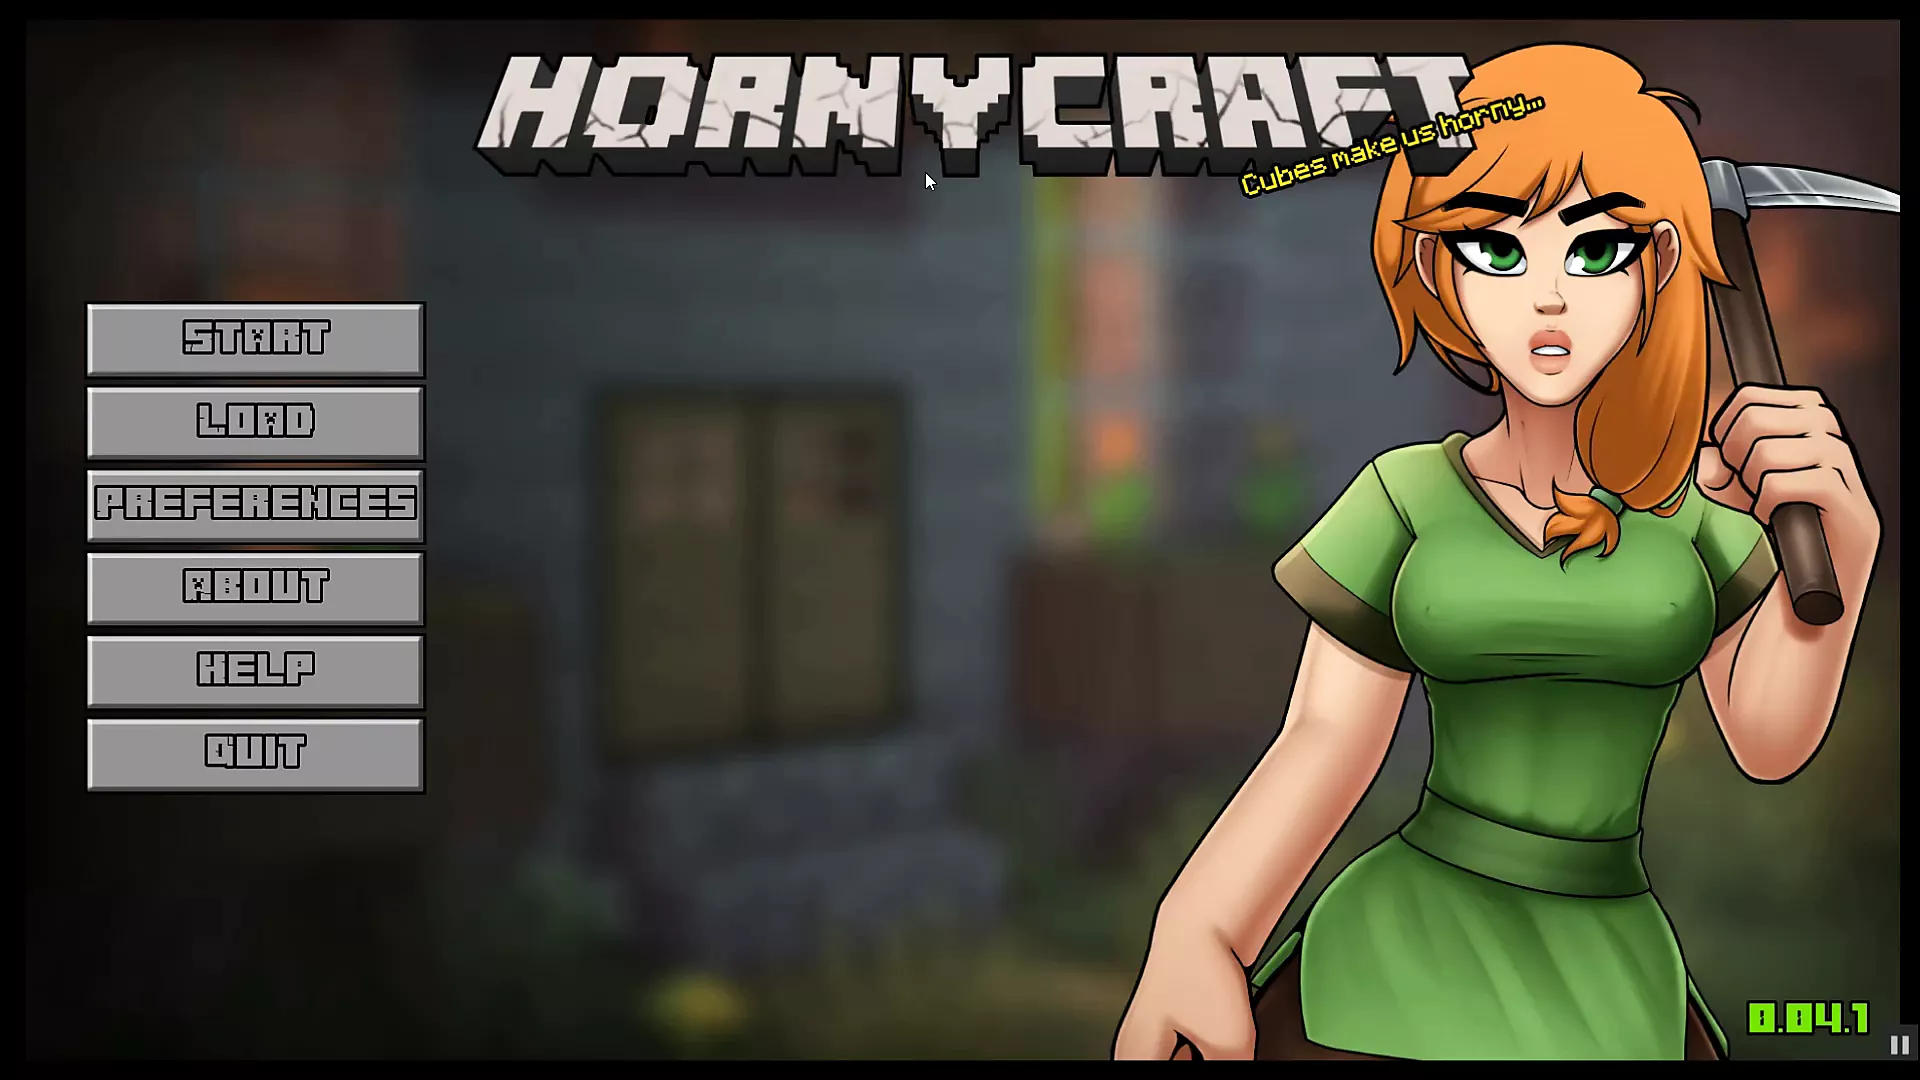 Anime Creeper Nude Hentai - Hornycraft Minecraft Hentai Game Parody Pornplay Ep 1 a Sexy Gold Bikini  Armor for Alex | xHamster